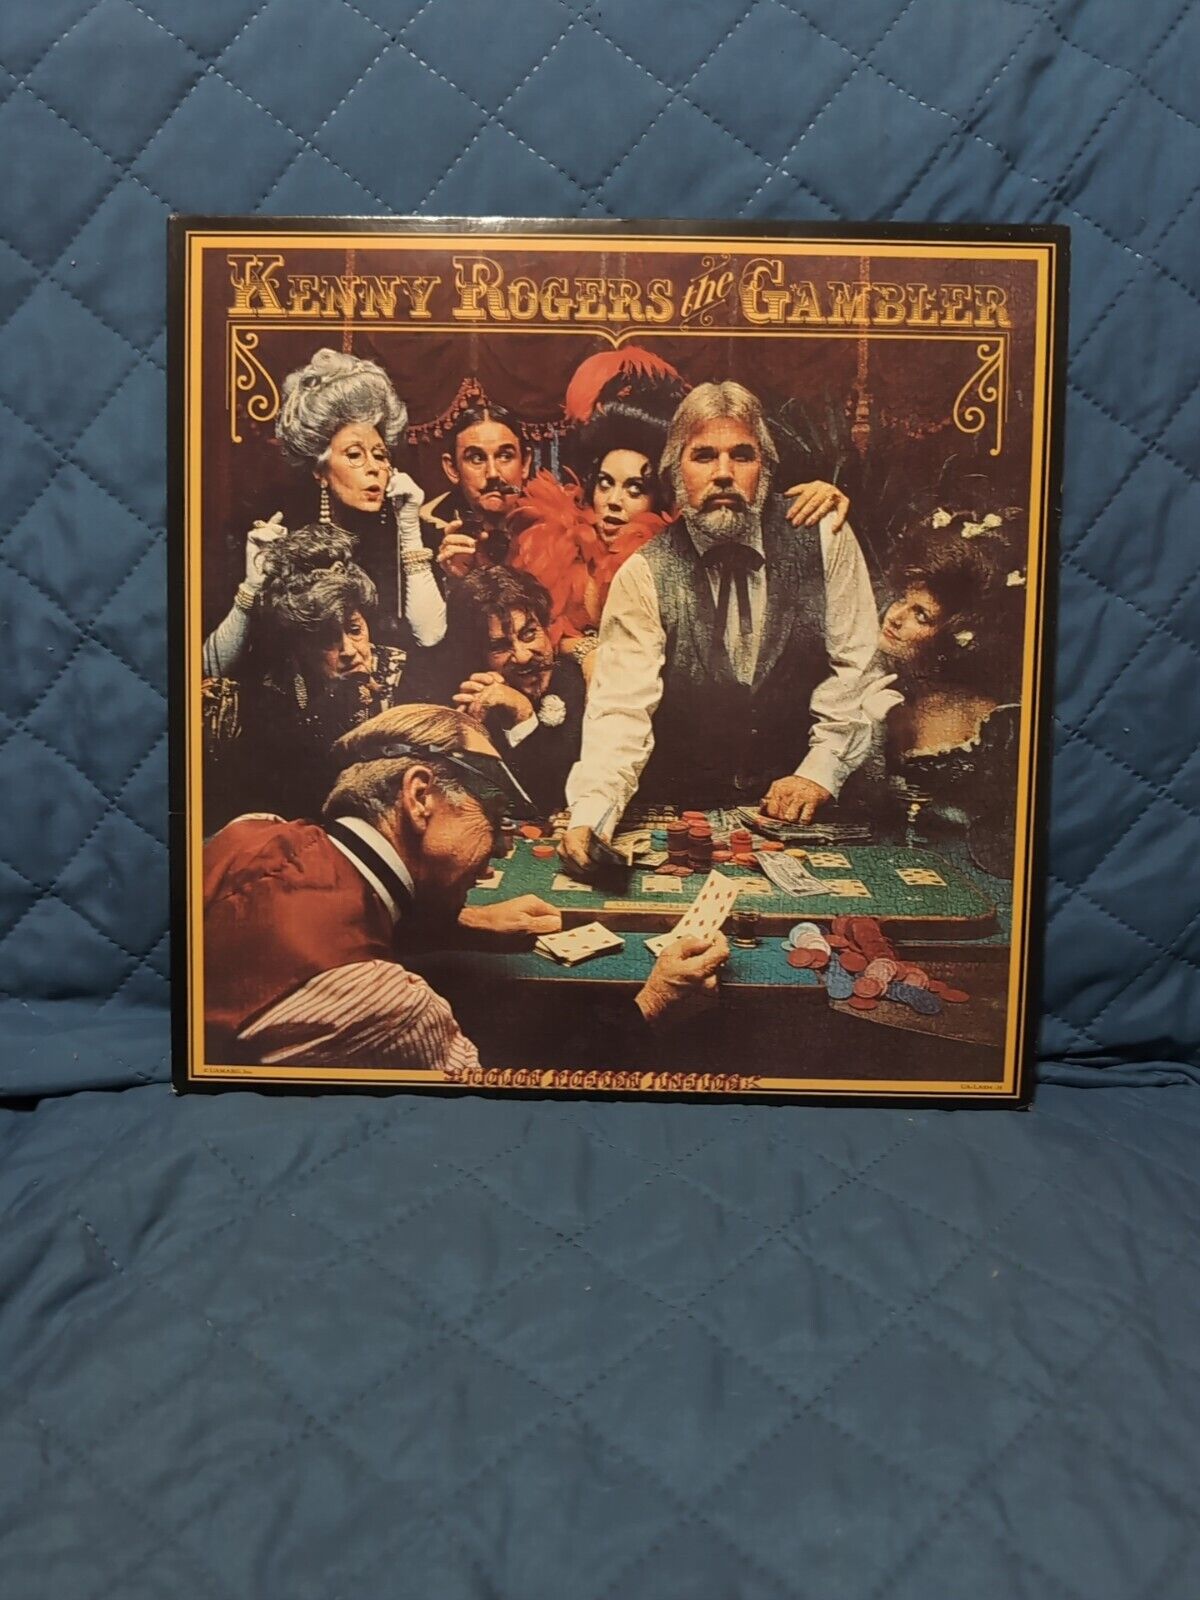 Kenny Rogers The Gambler Vintage Vinyl